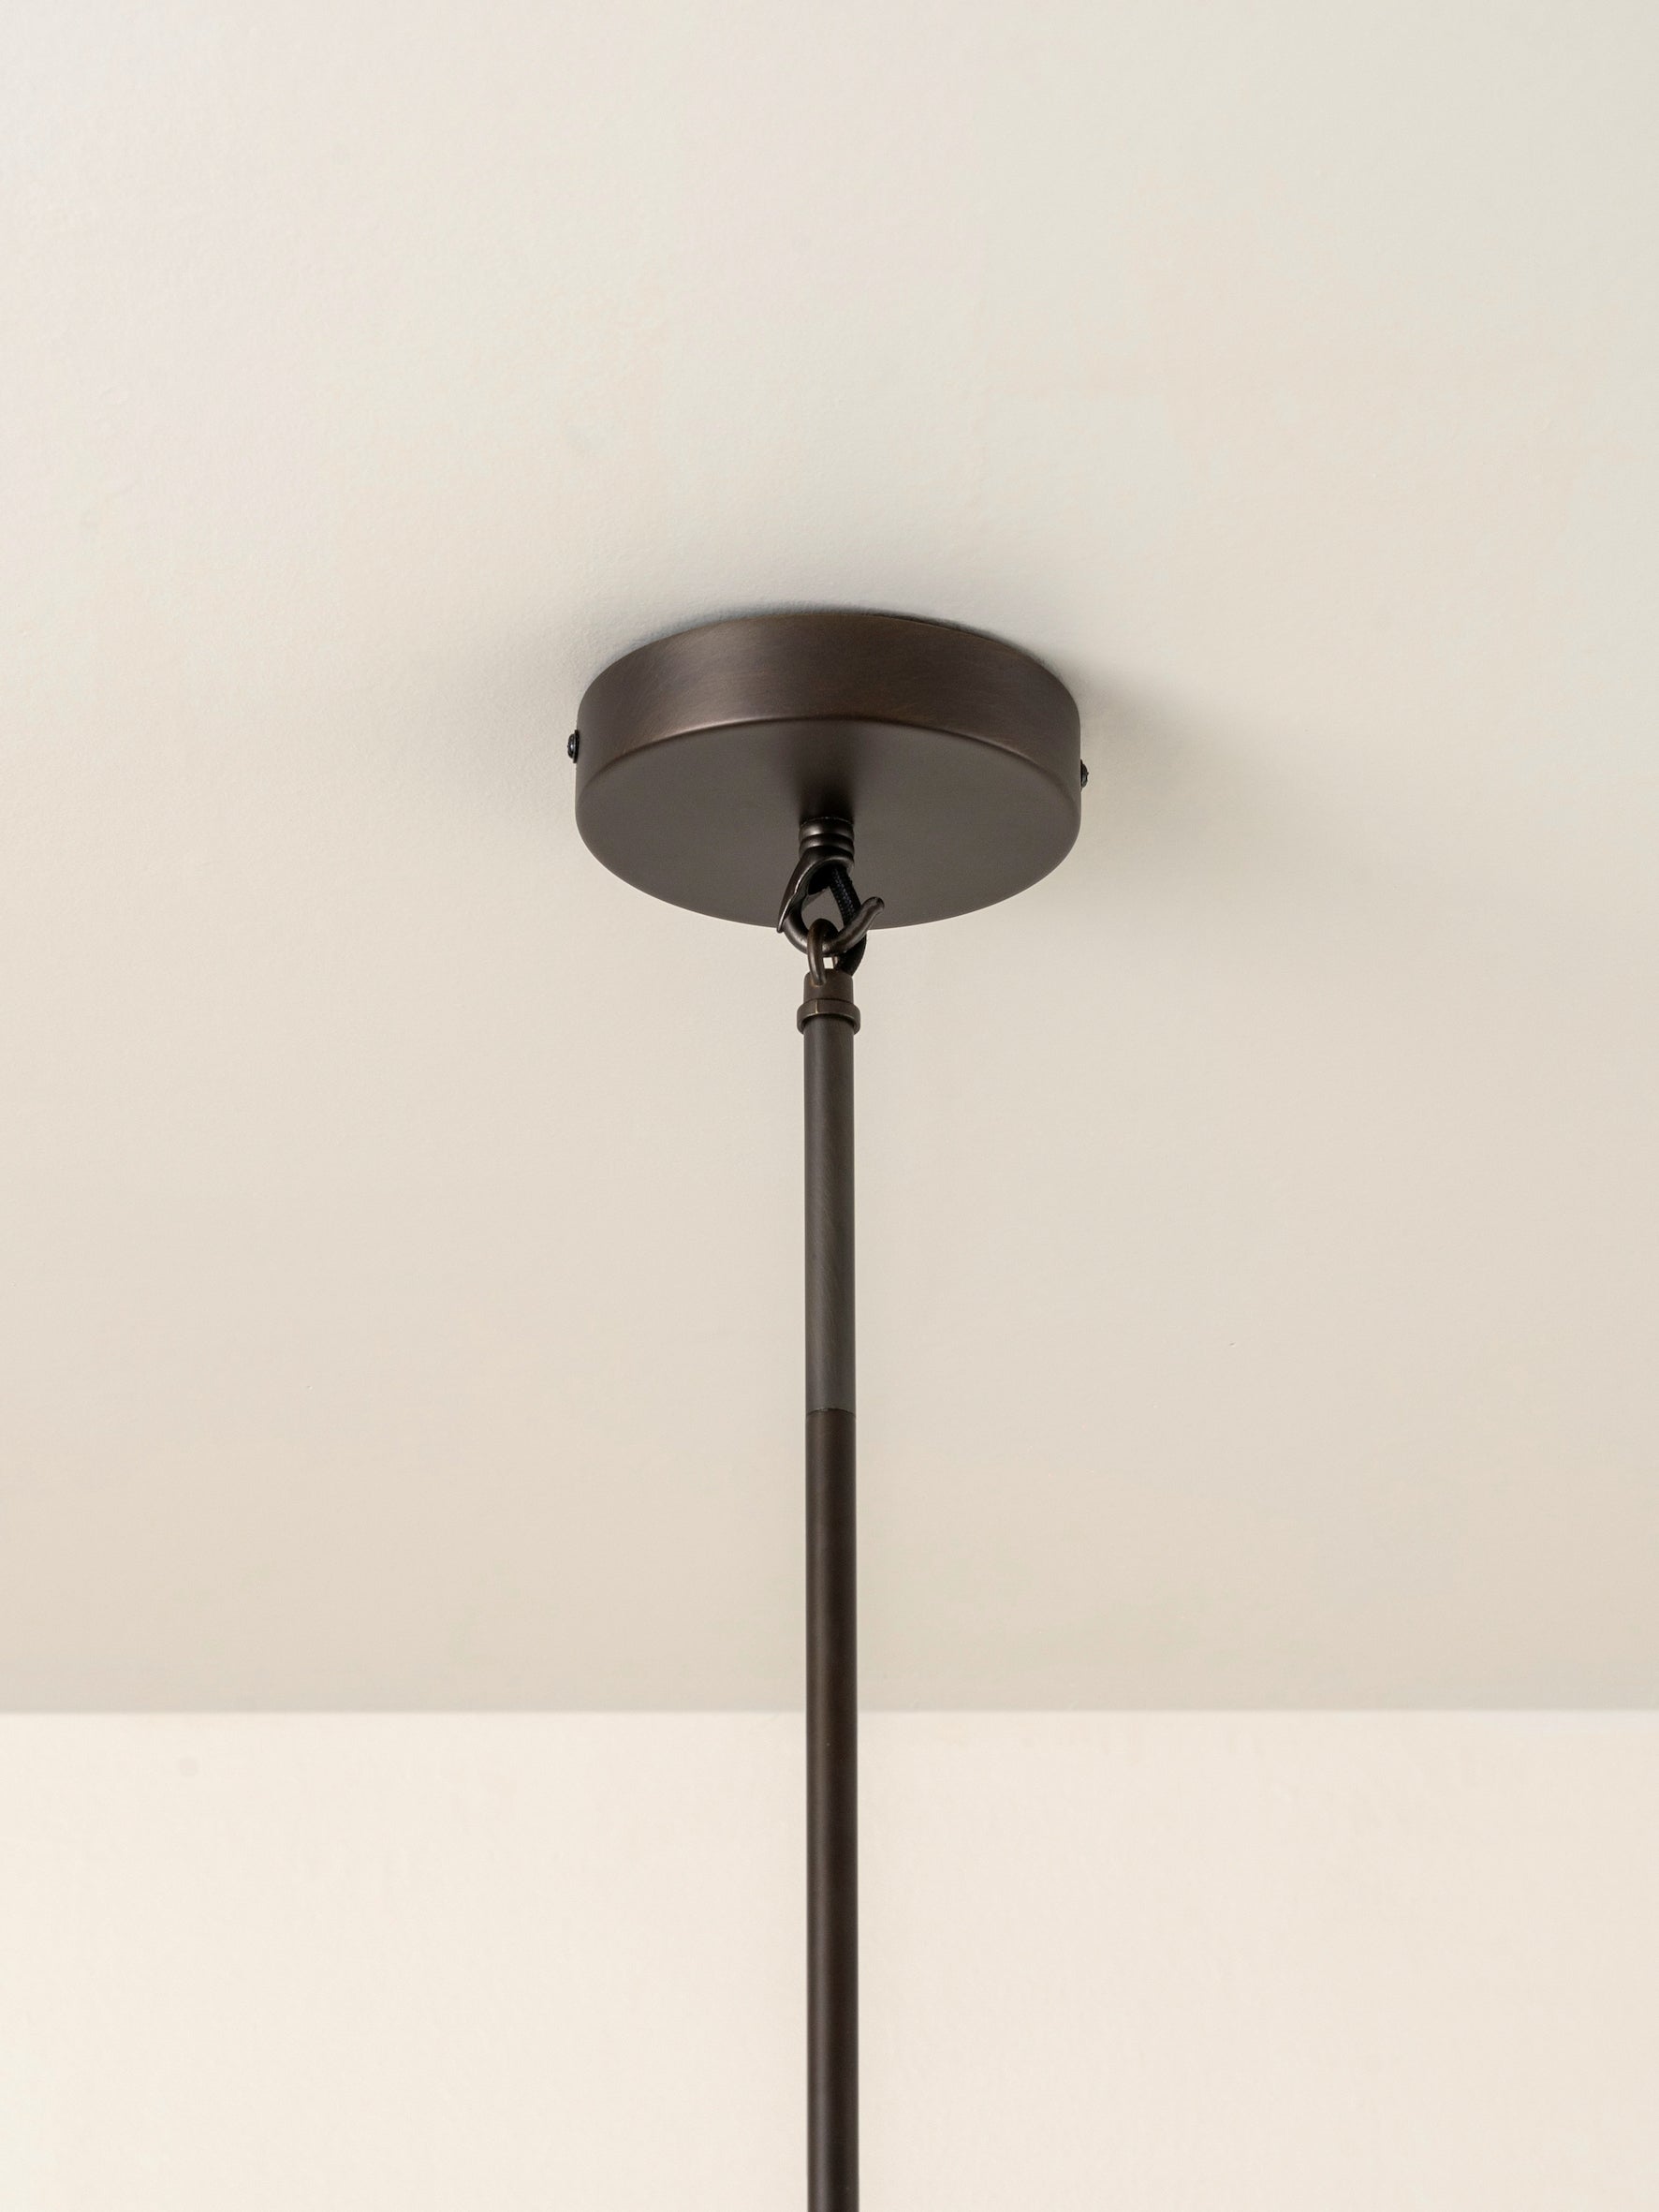 Renwick - 5 light linen and bronze pendant | Ceiling Light | Lights & Lamps Inc | Modern Affordable Designer Lighting | USA